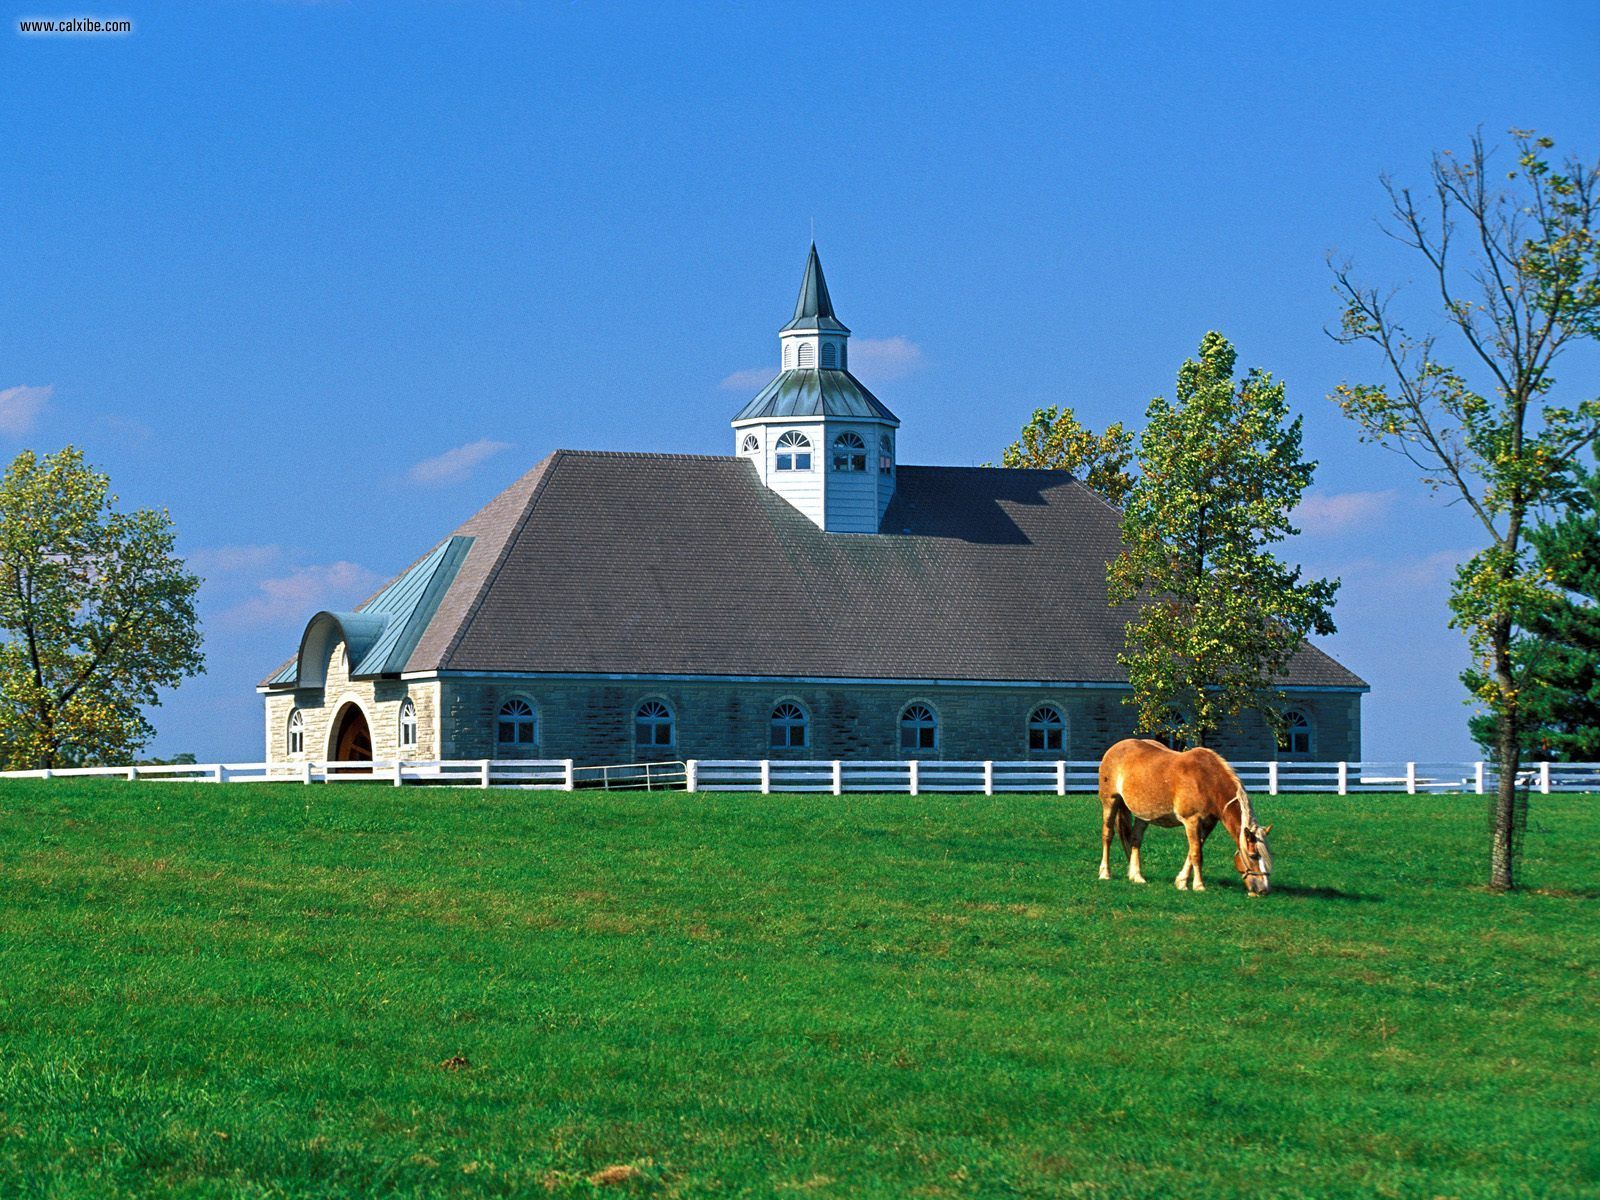 Donamire Horse Farm Lexington Kentucky Desktop Wallpaper Nr